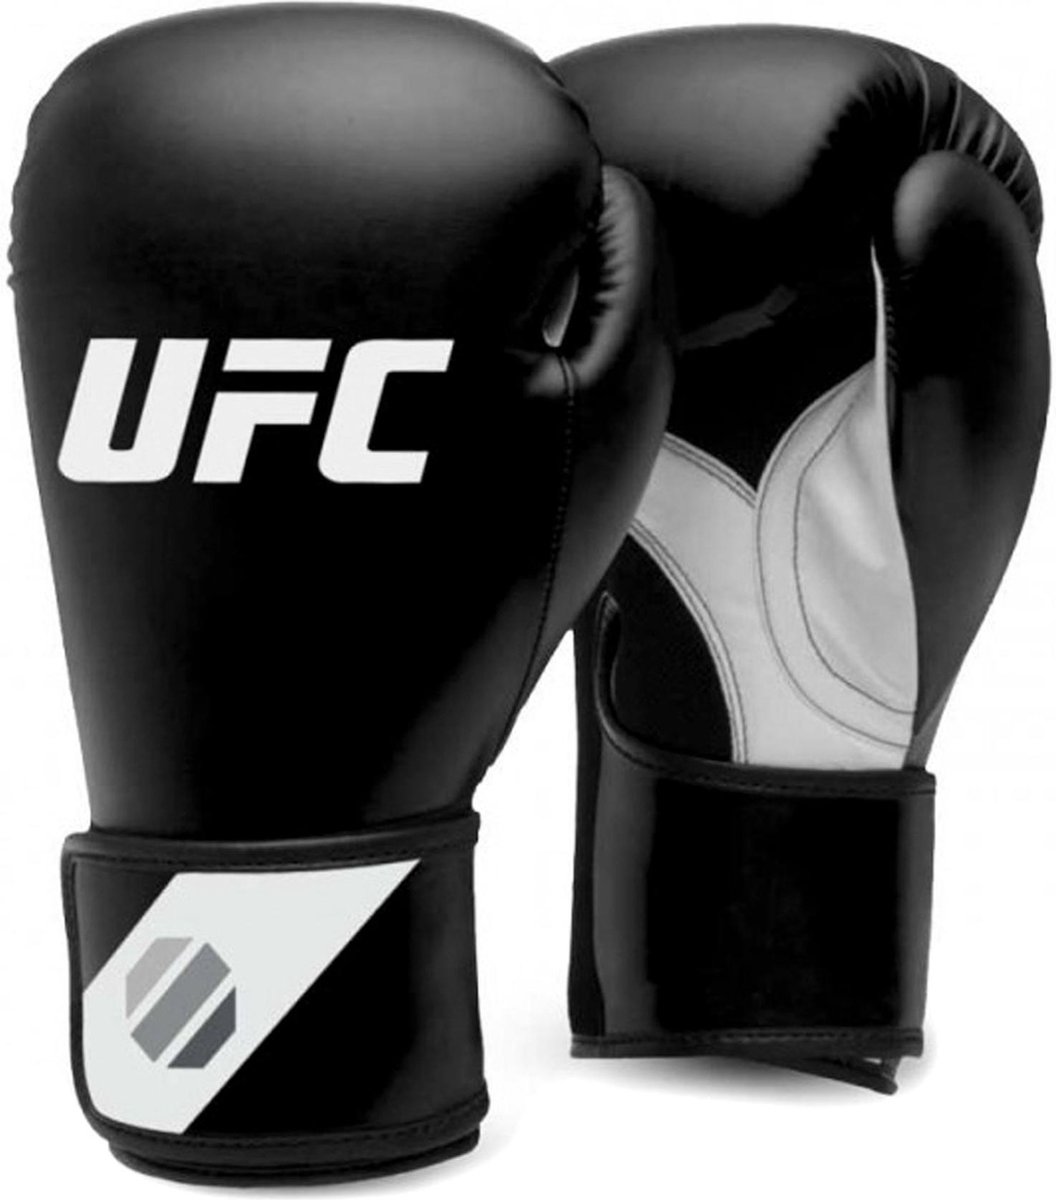 UFC - Training (kick)bokshandschoenen (12 oz - Zwart/Wit)